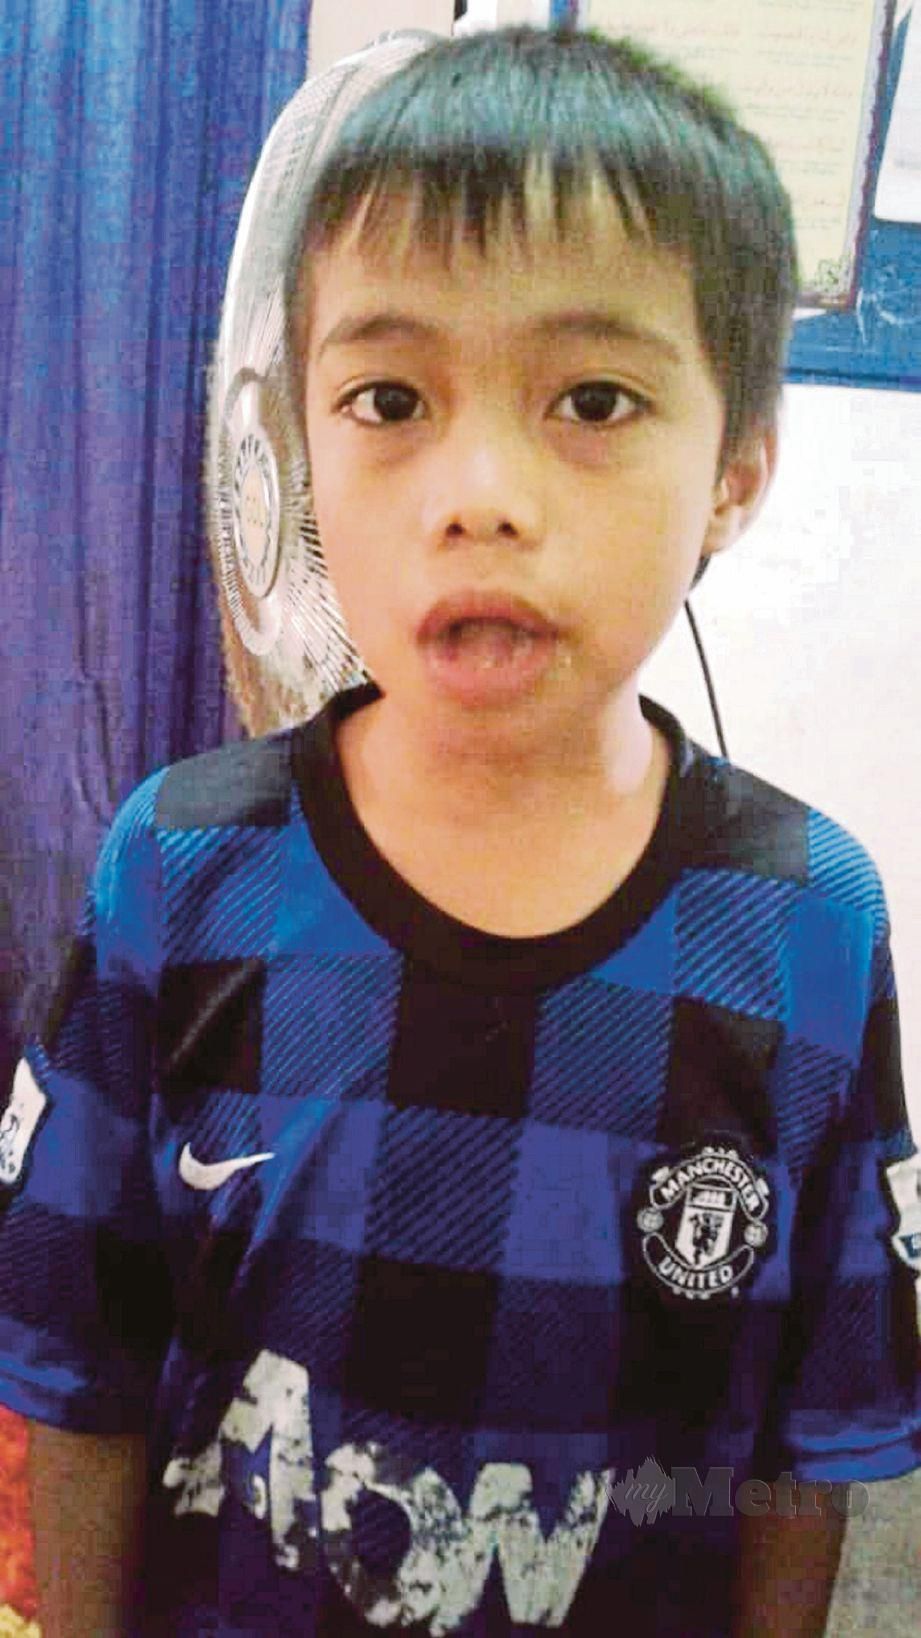 MUHAMMAD Zahiruddin Putra Mohd Fauzi, 8, dilaporkan hilang selepas keluar dari rumahnya di Bandar Seri Putra, Kajang, semalam, turut dihebahkan melalui Nur Alert. FOTO/EMAIL